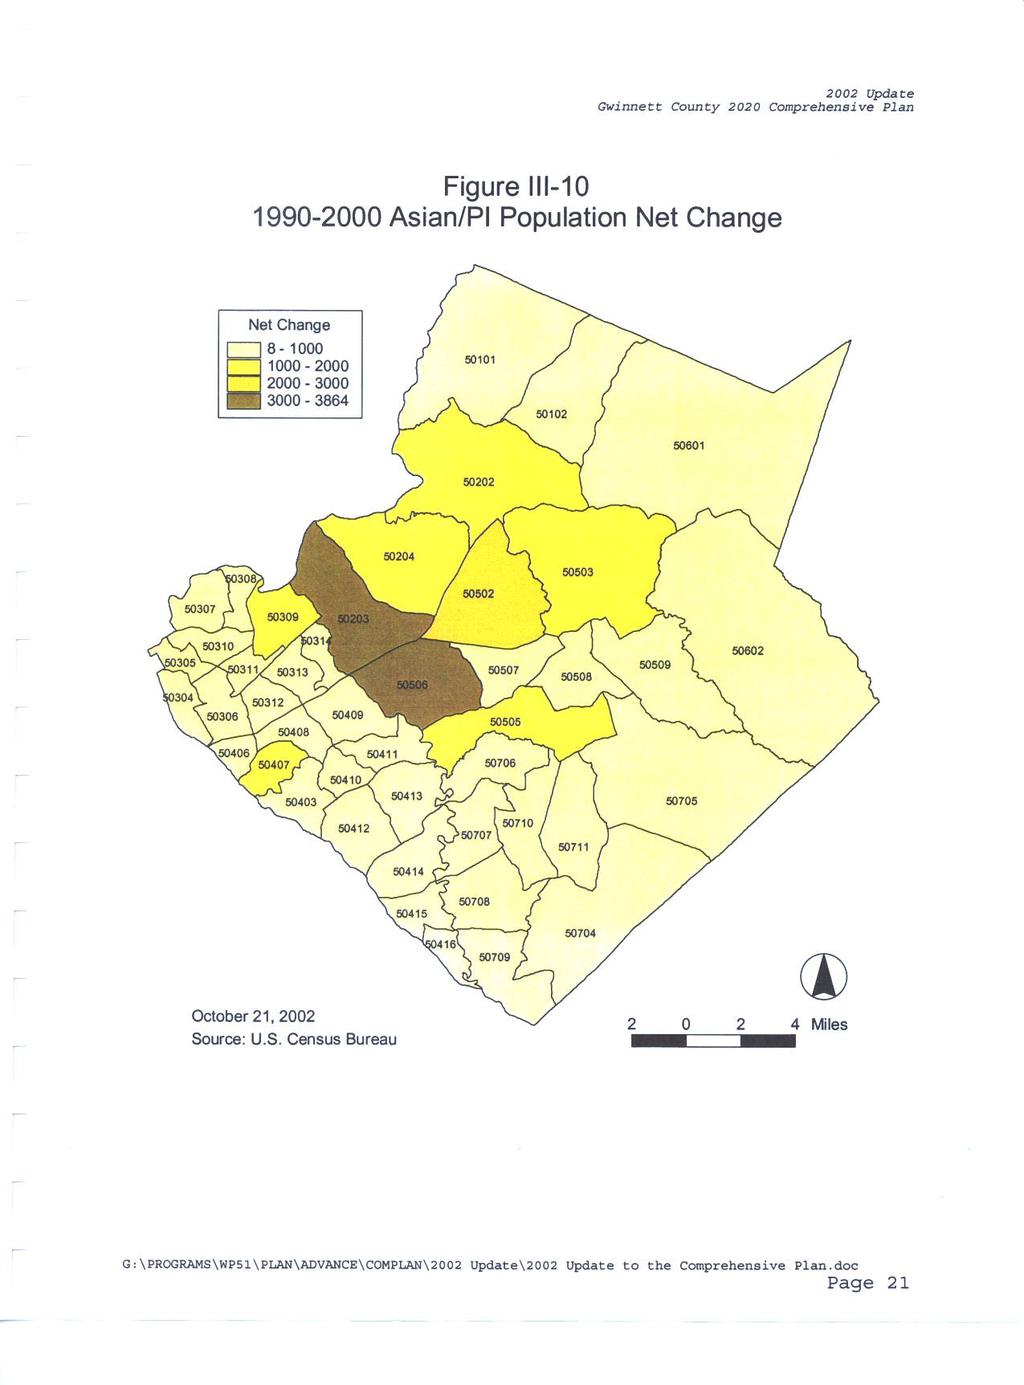 Gwinnett County, Georgia Consolidated Plan 2006-2010 -